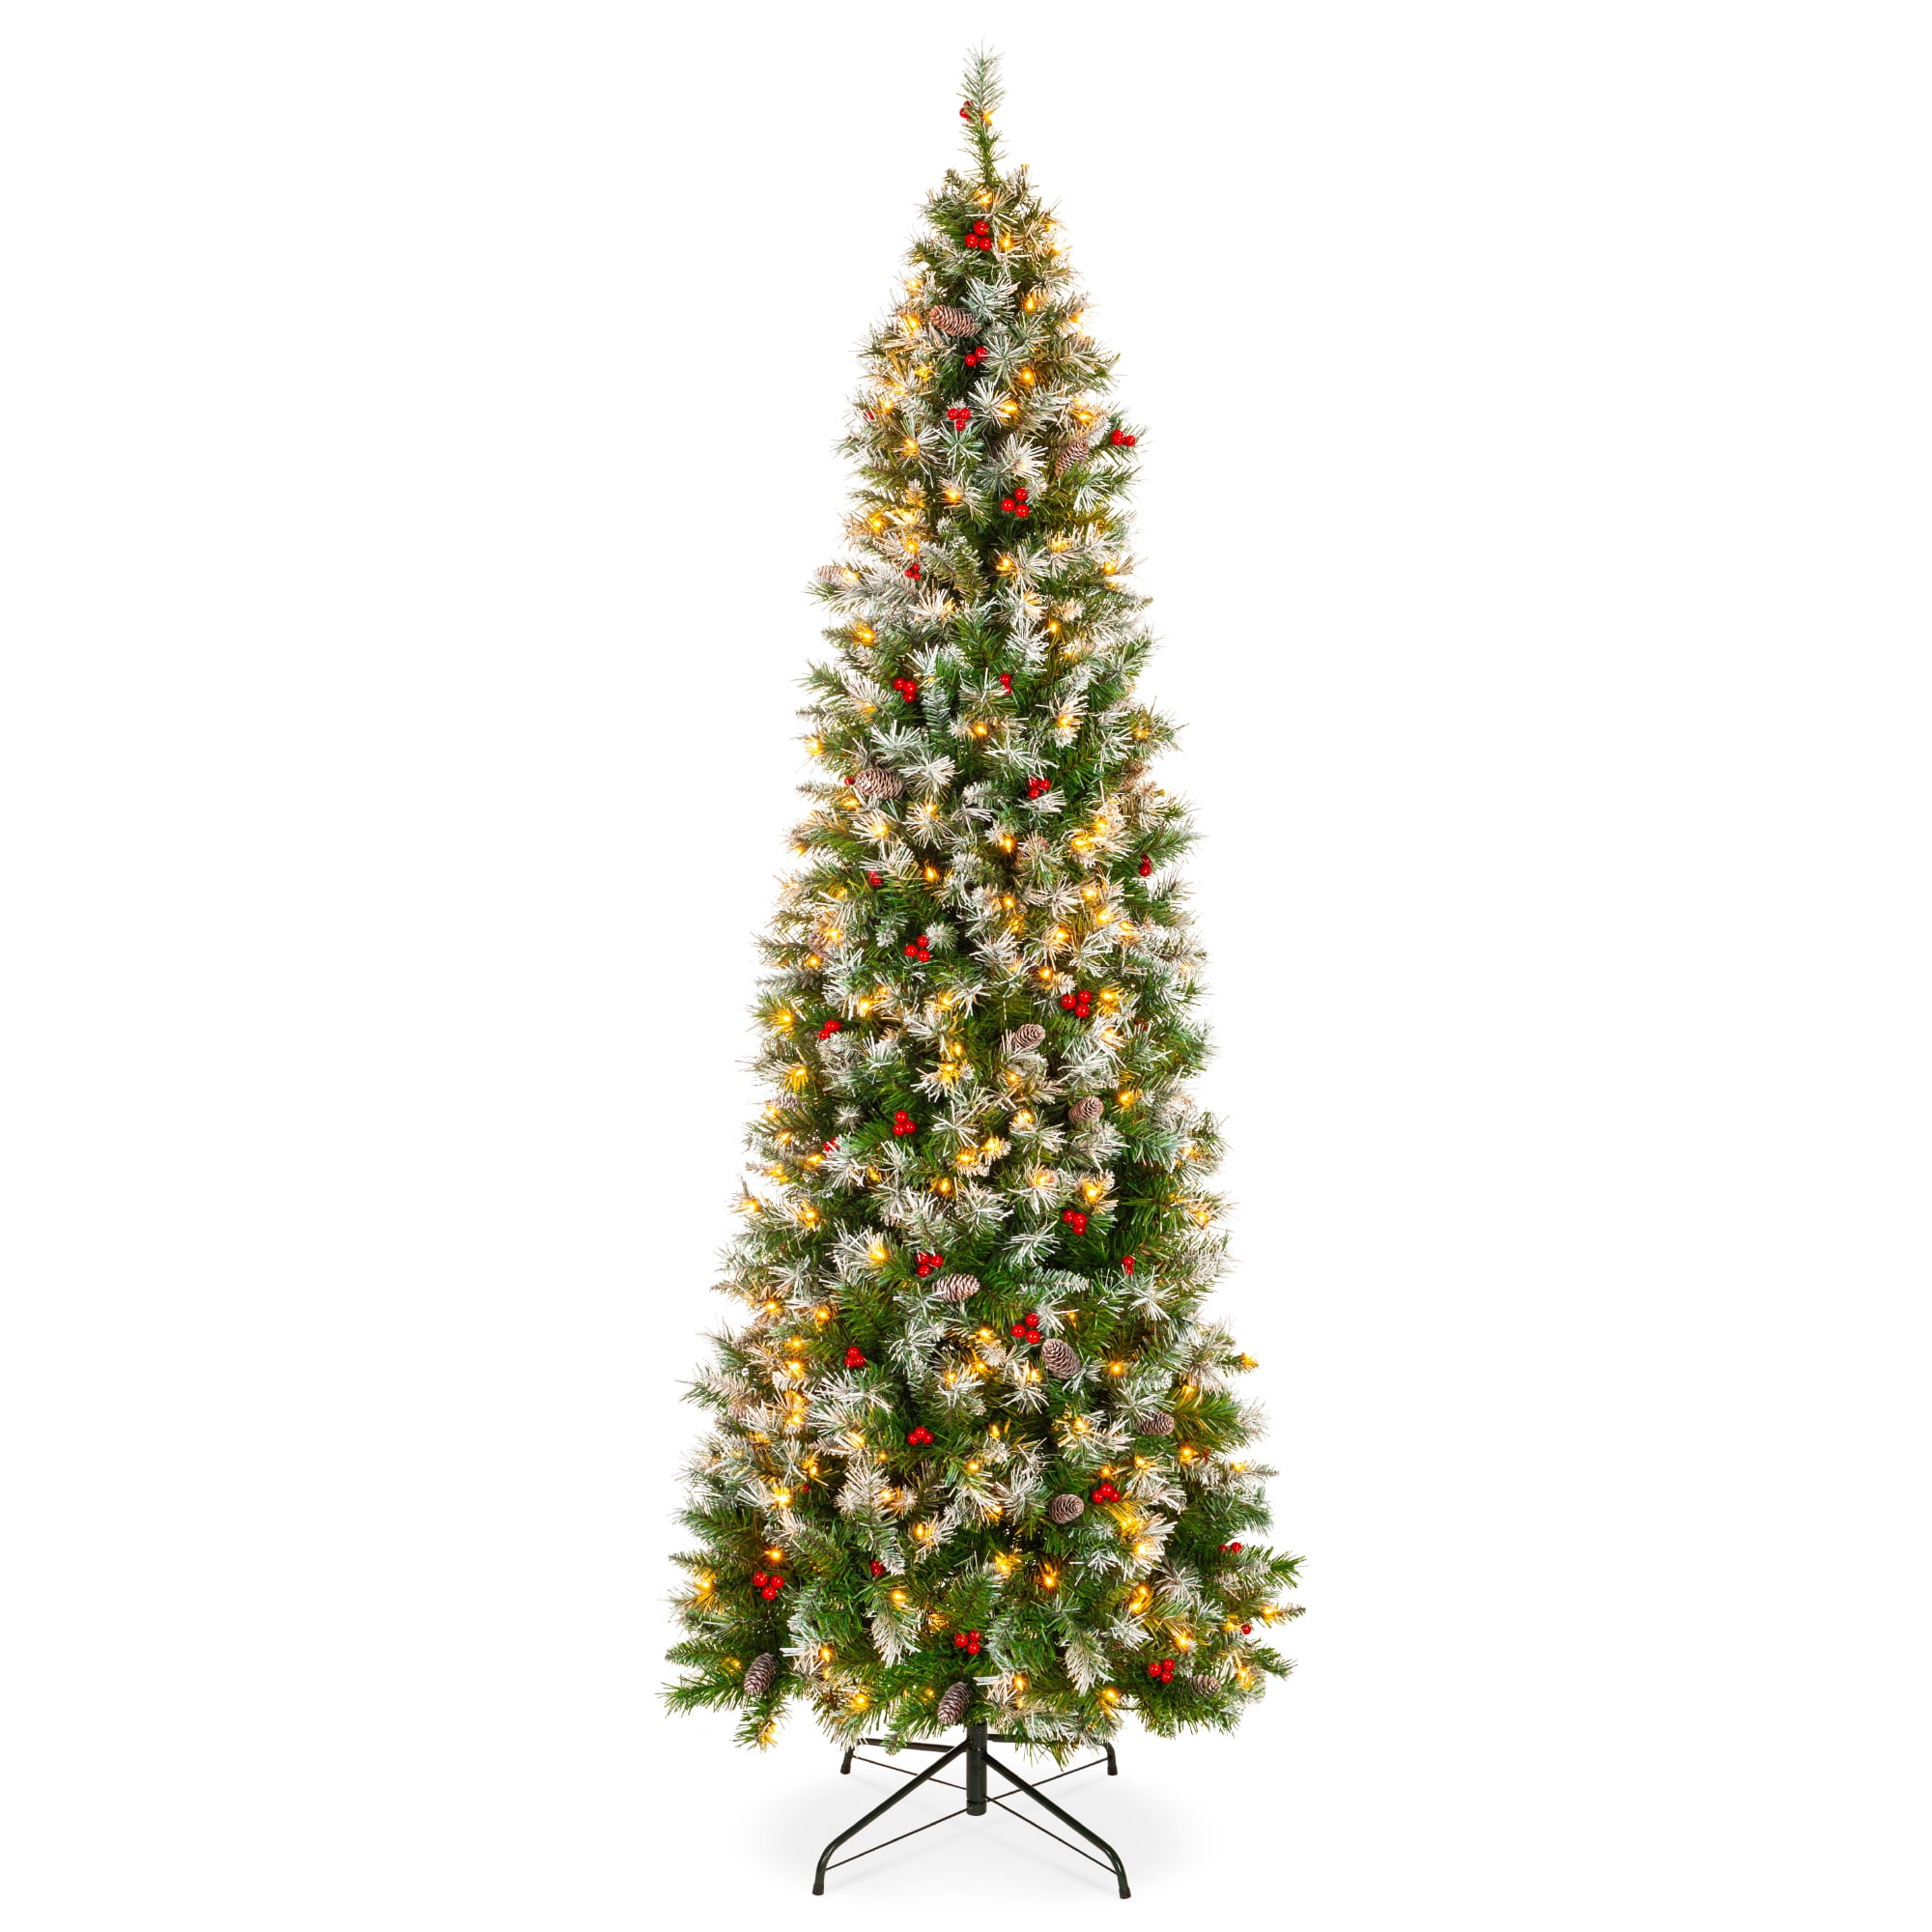 Black Christmas Tree Artificial Pine Bushy Outdoor Xmas Home Decoration 4-12FEET 